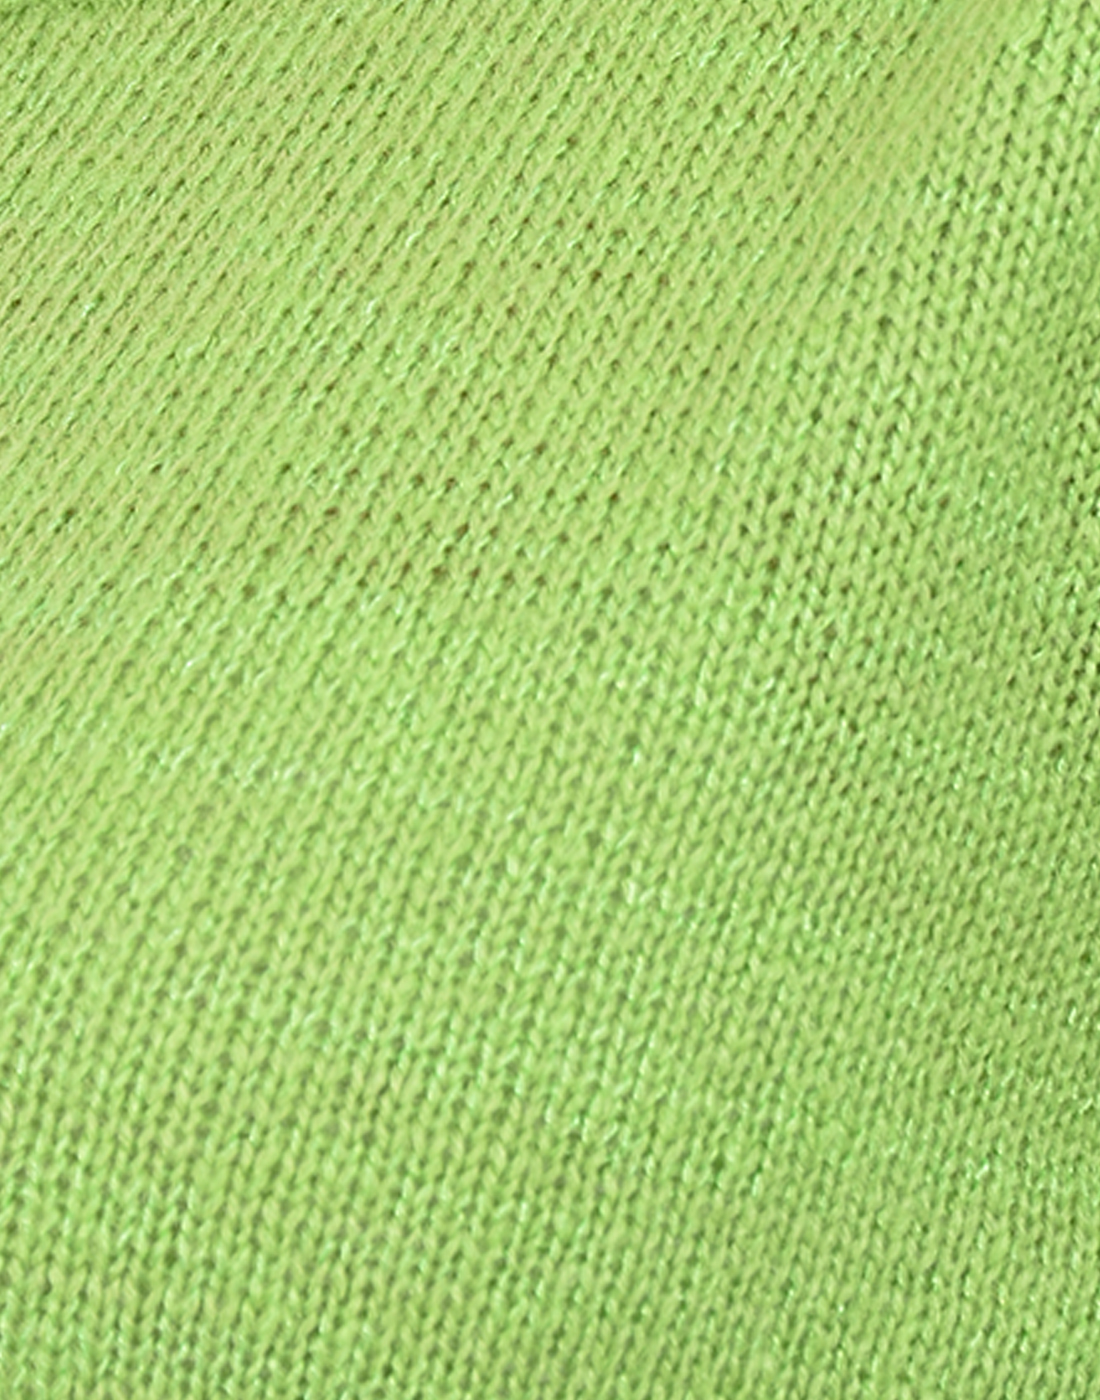 Species Women Self Design Green Sweater